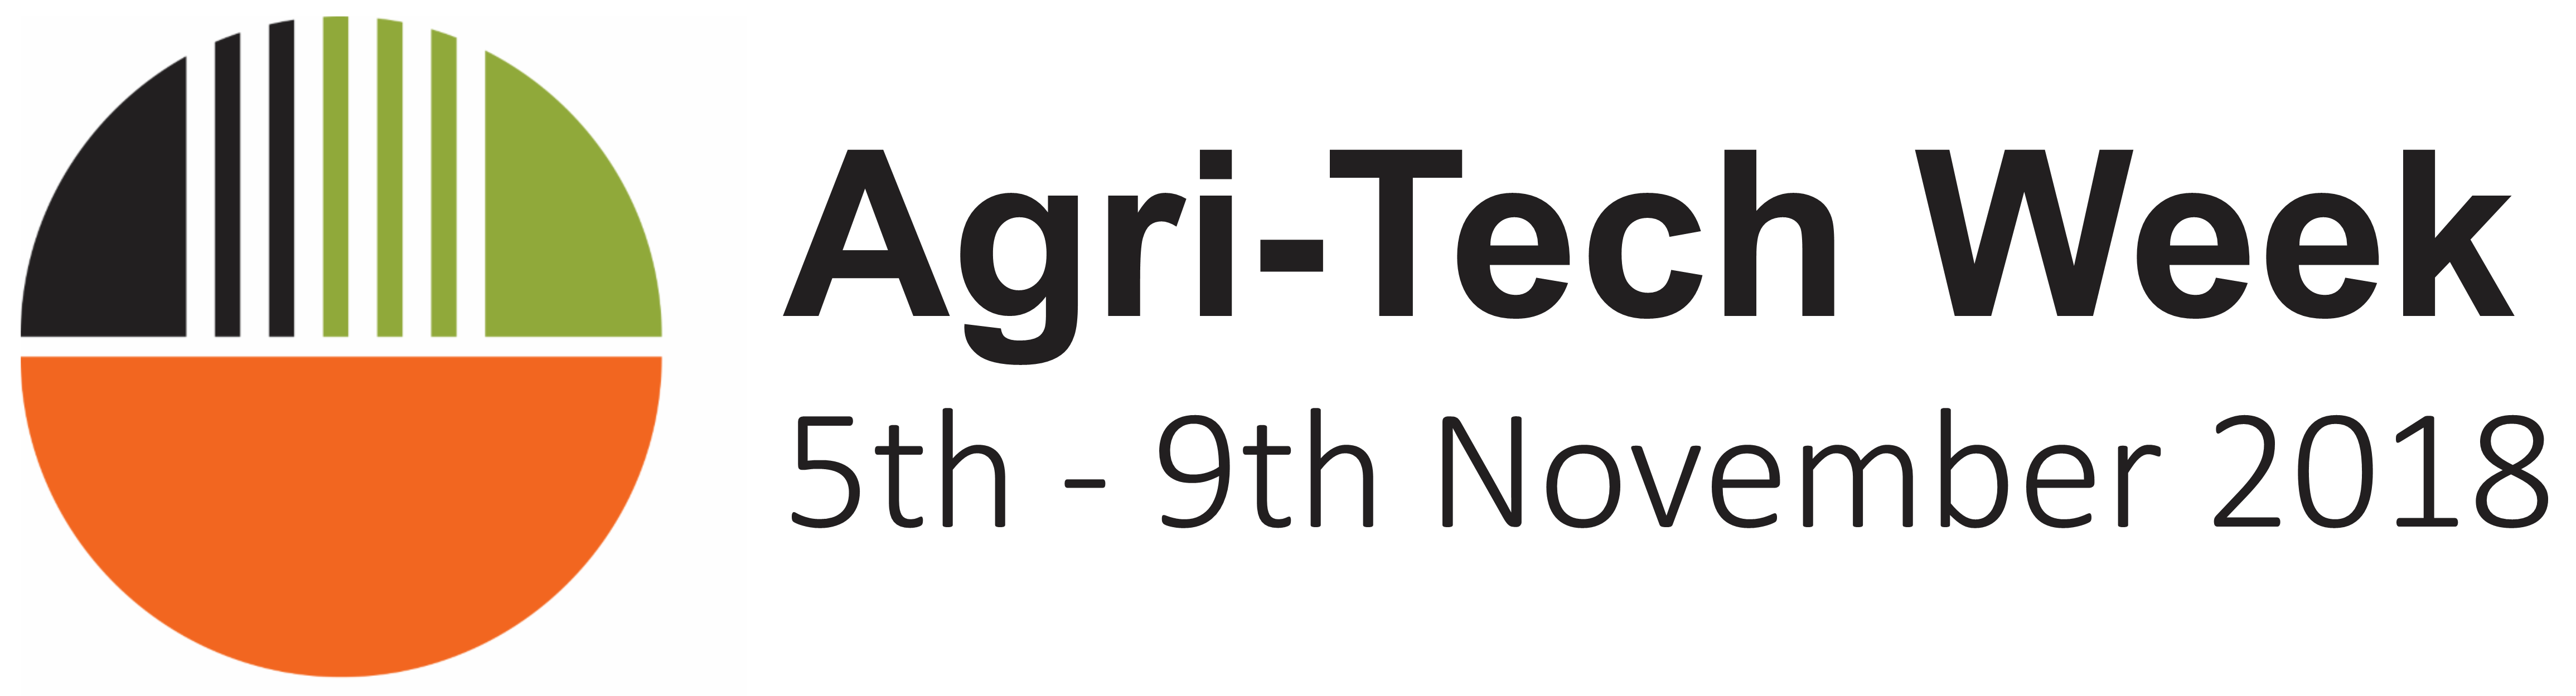 Agri-Tech Week 2018